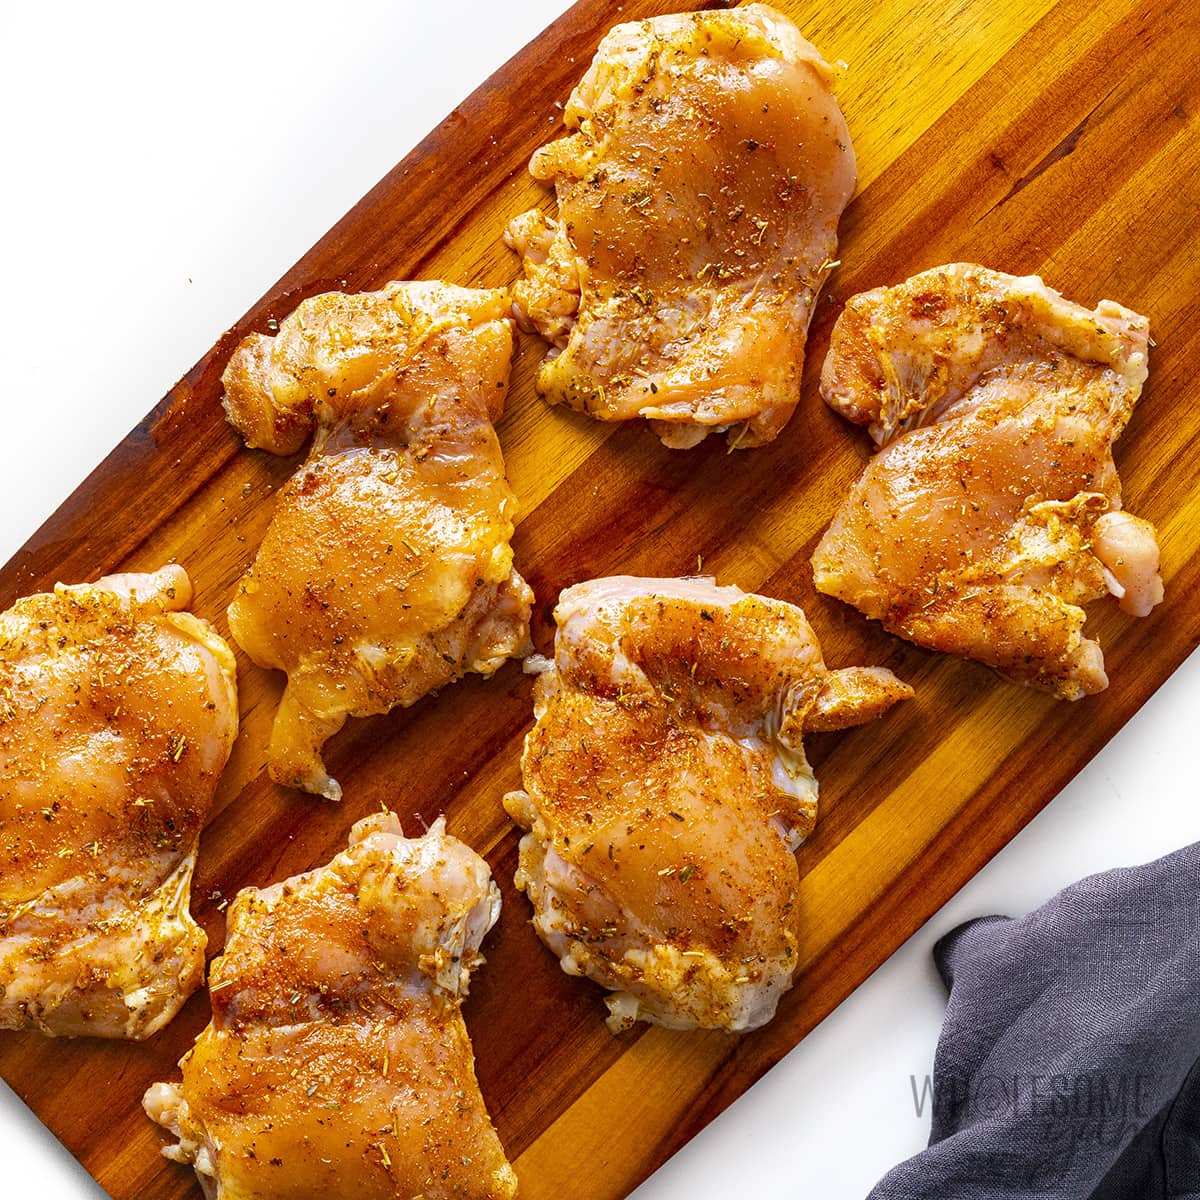 Raw boneless skinless chicken thighs seasoned on a cutting board.